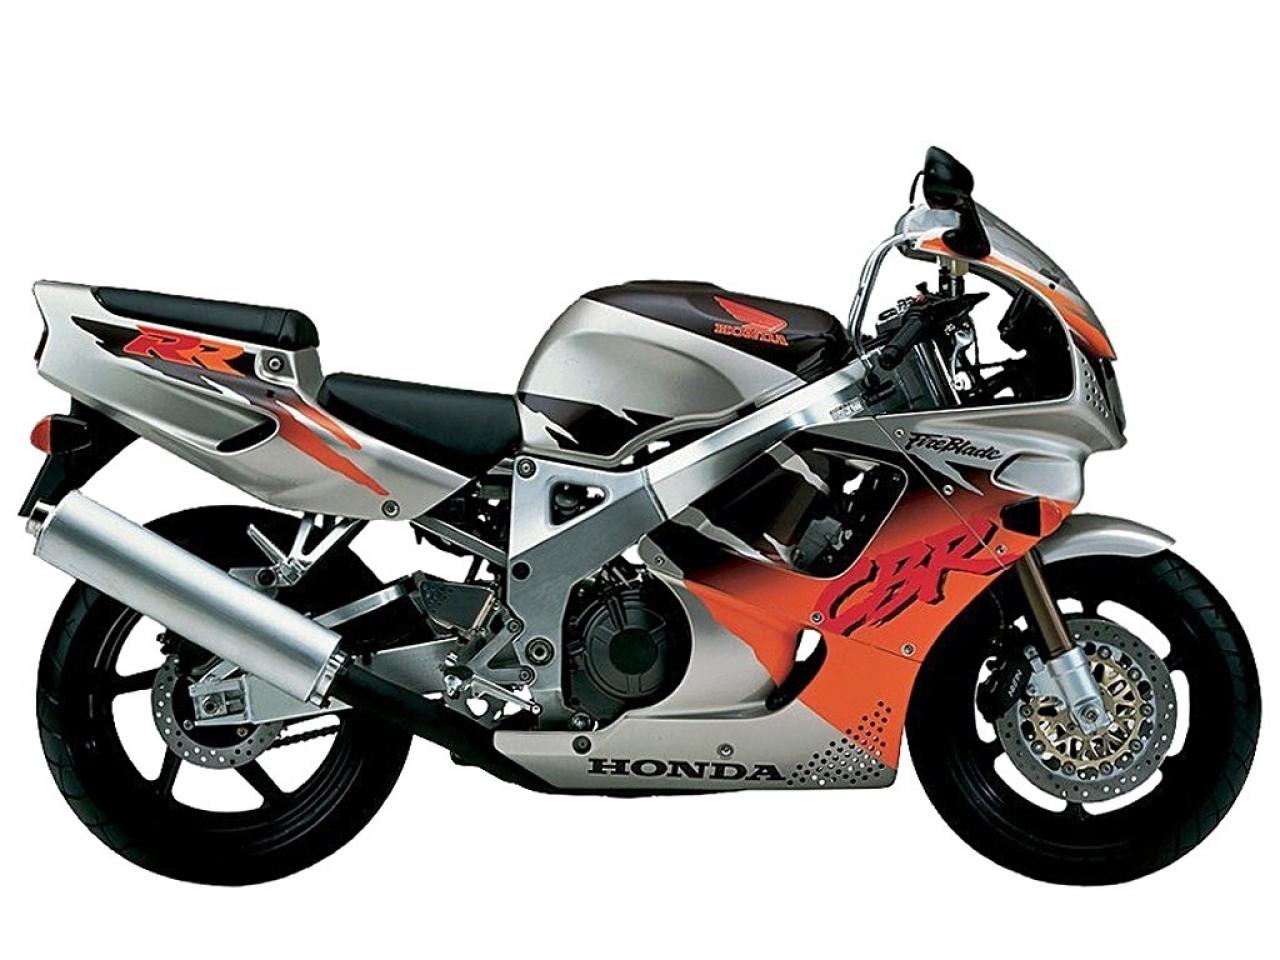 Мотоцикл honda cbr 900 rr fireblade / 954 rr 2002: раскрываем все нюансы